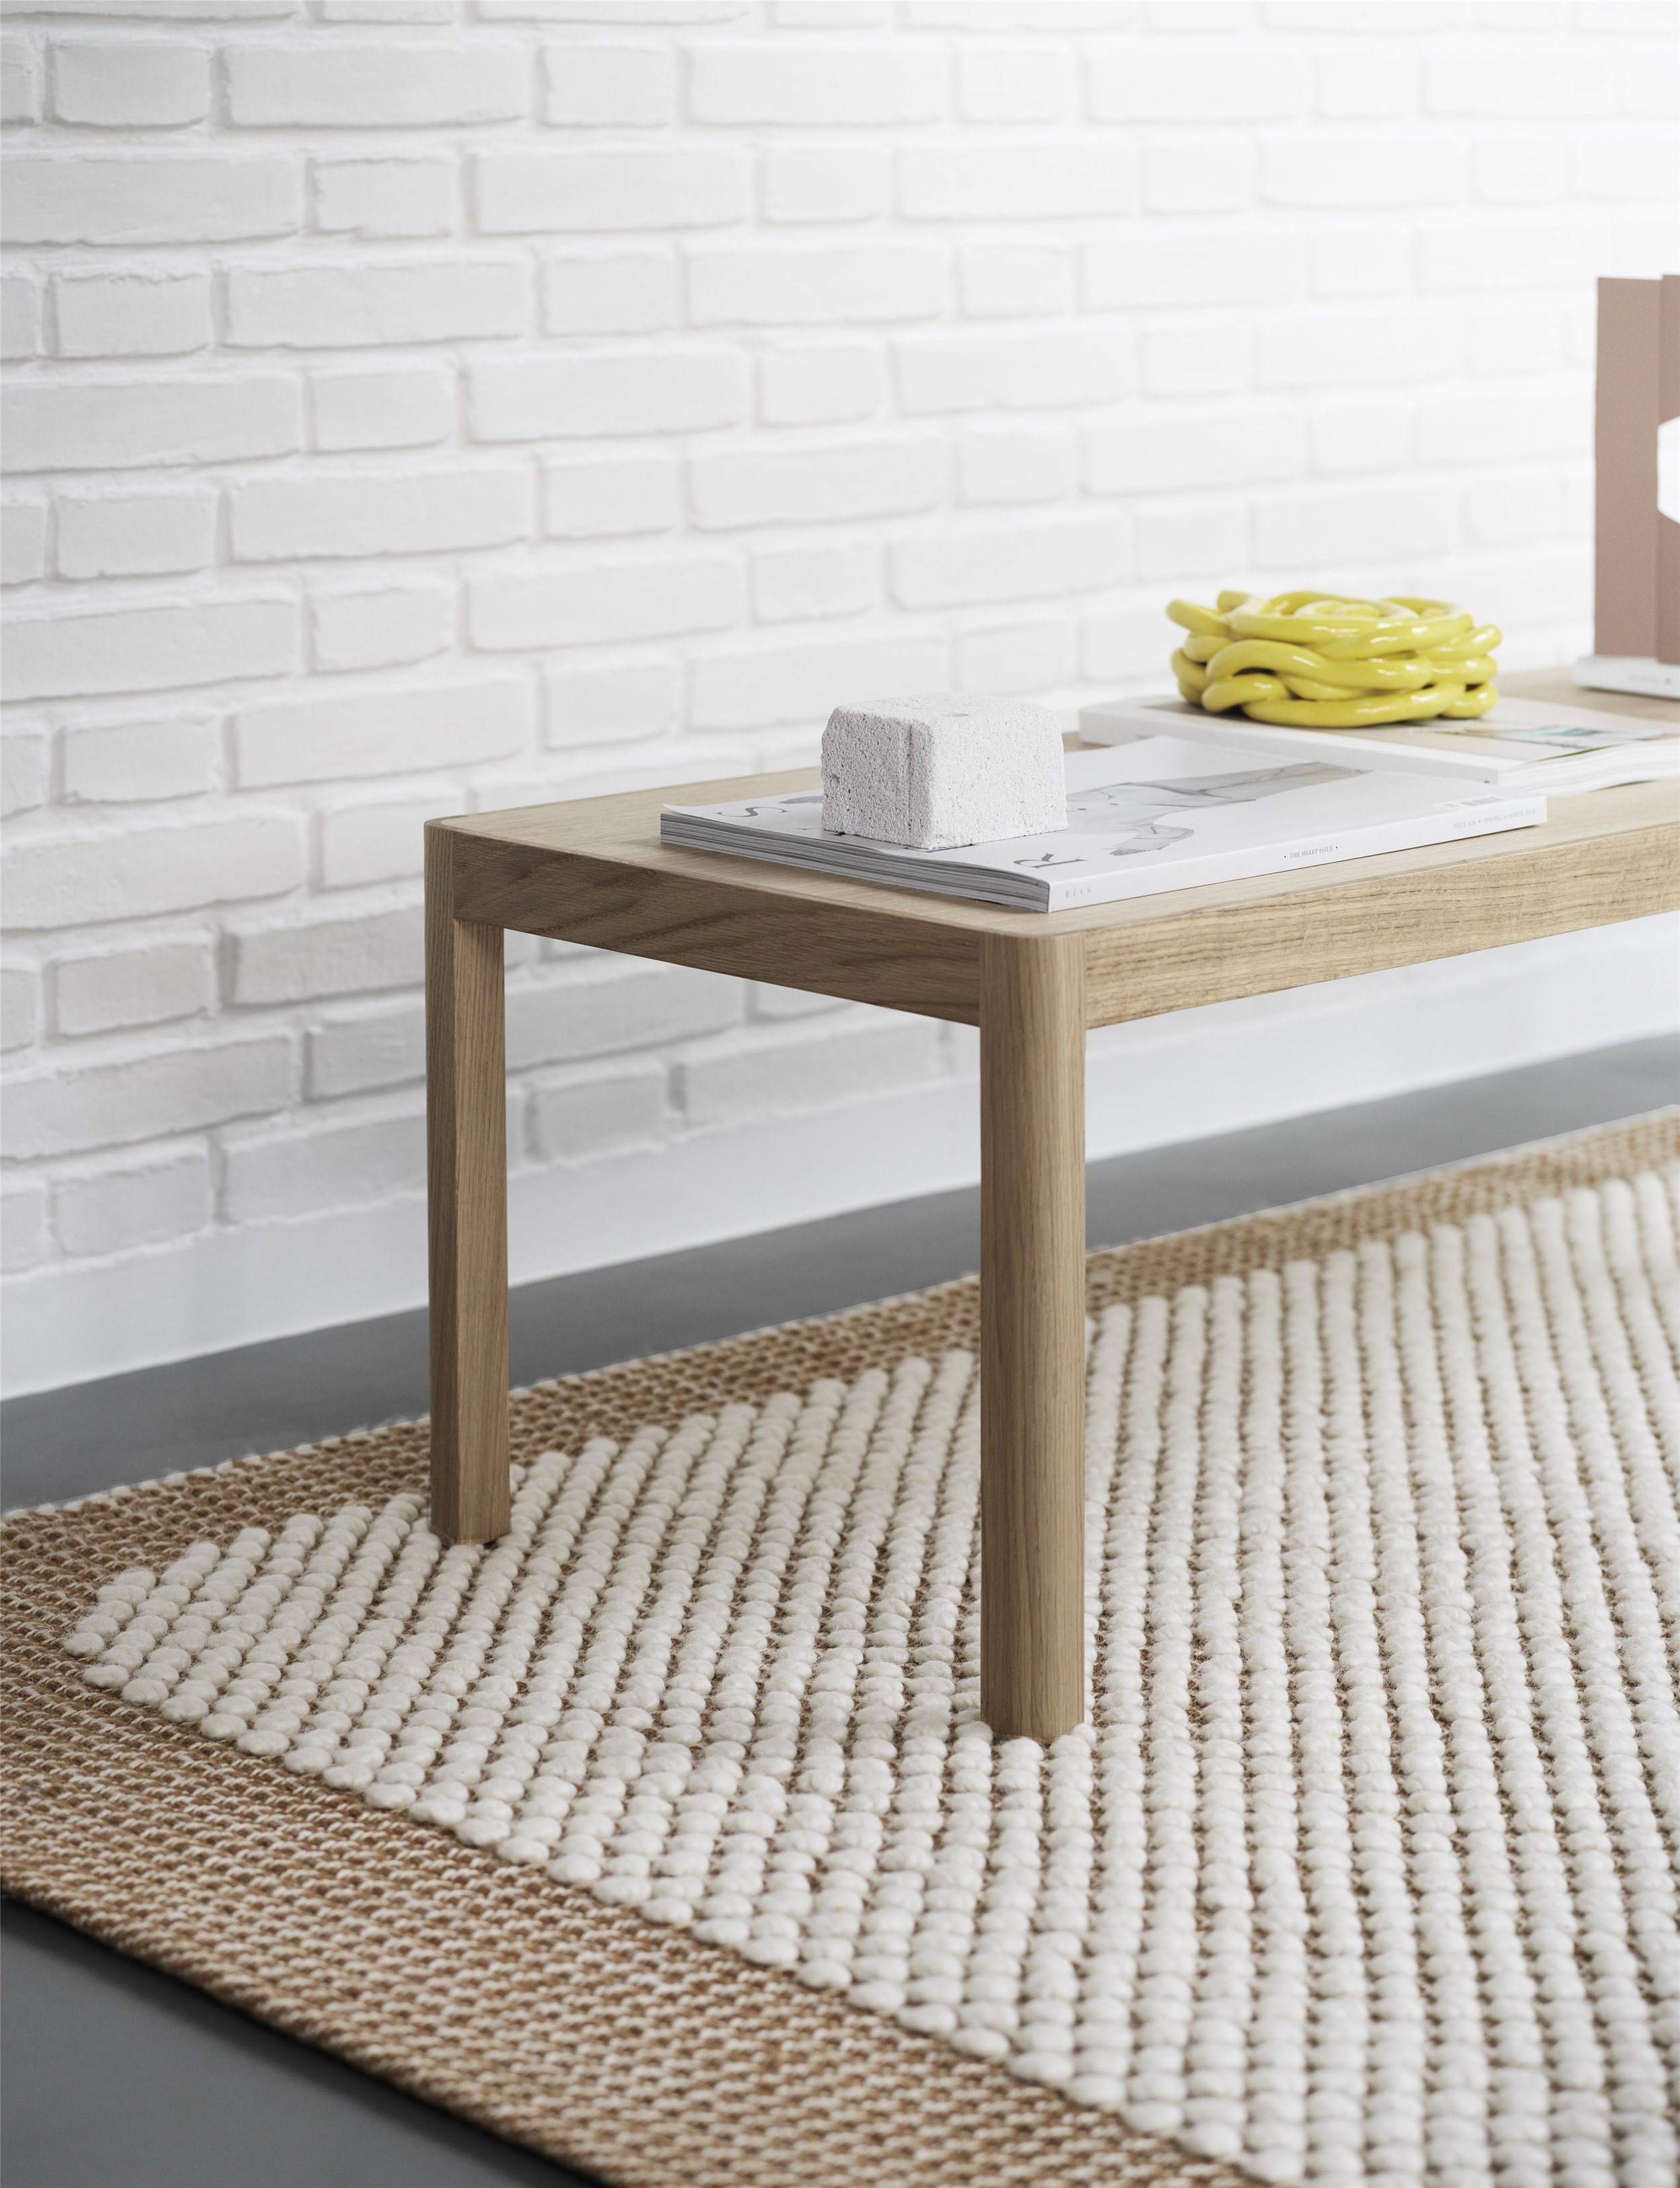 Pebble rug & workshop table  muuto, home decor, accessories, interiors, scandinavian design .jpg